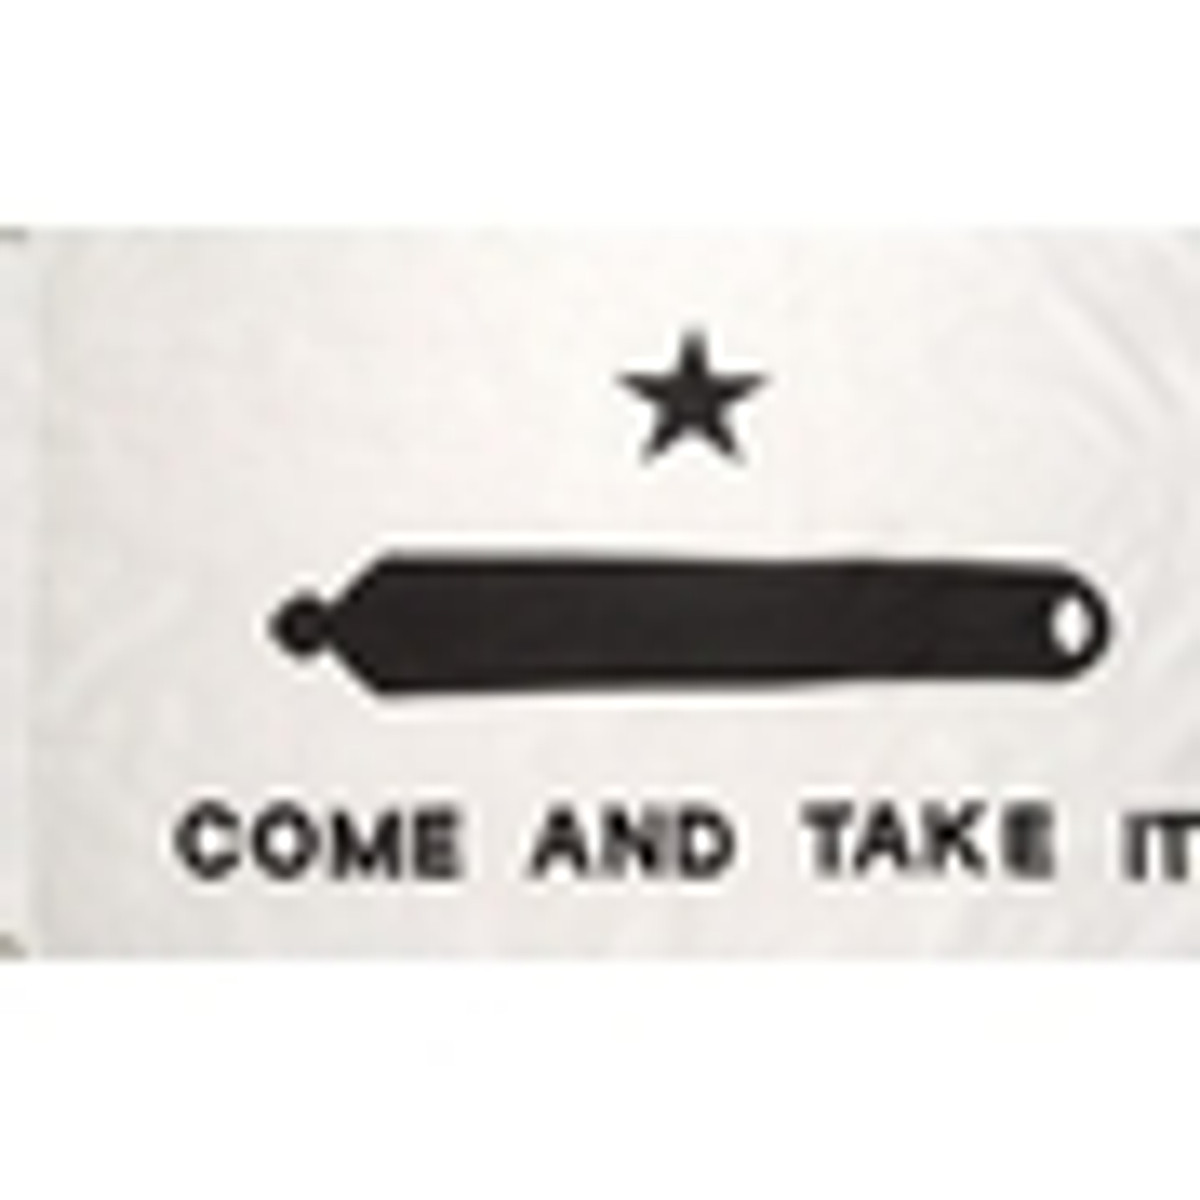 Gonzales - Come & Take It Flag